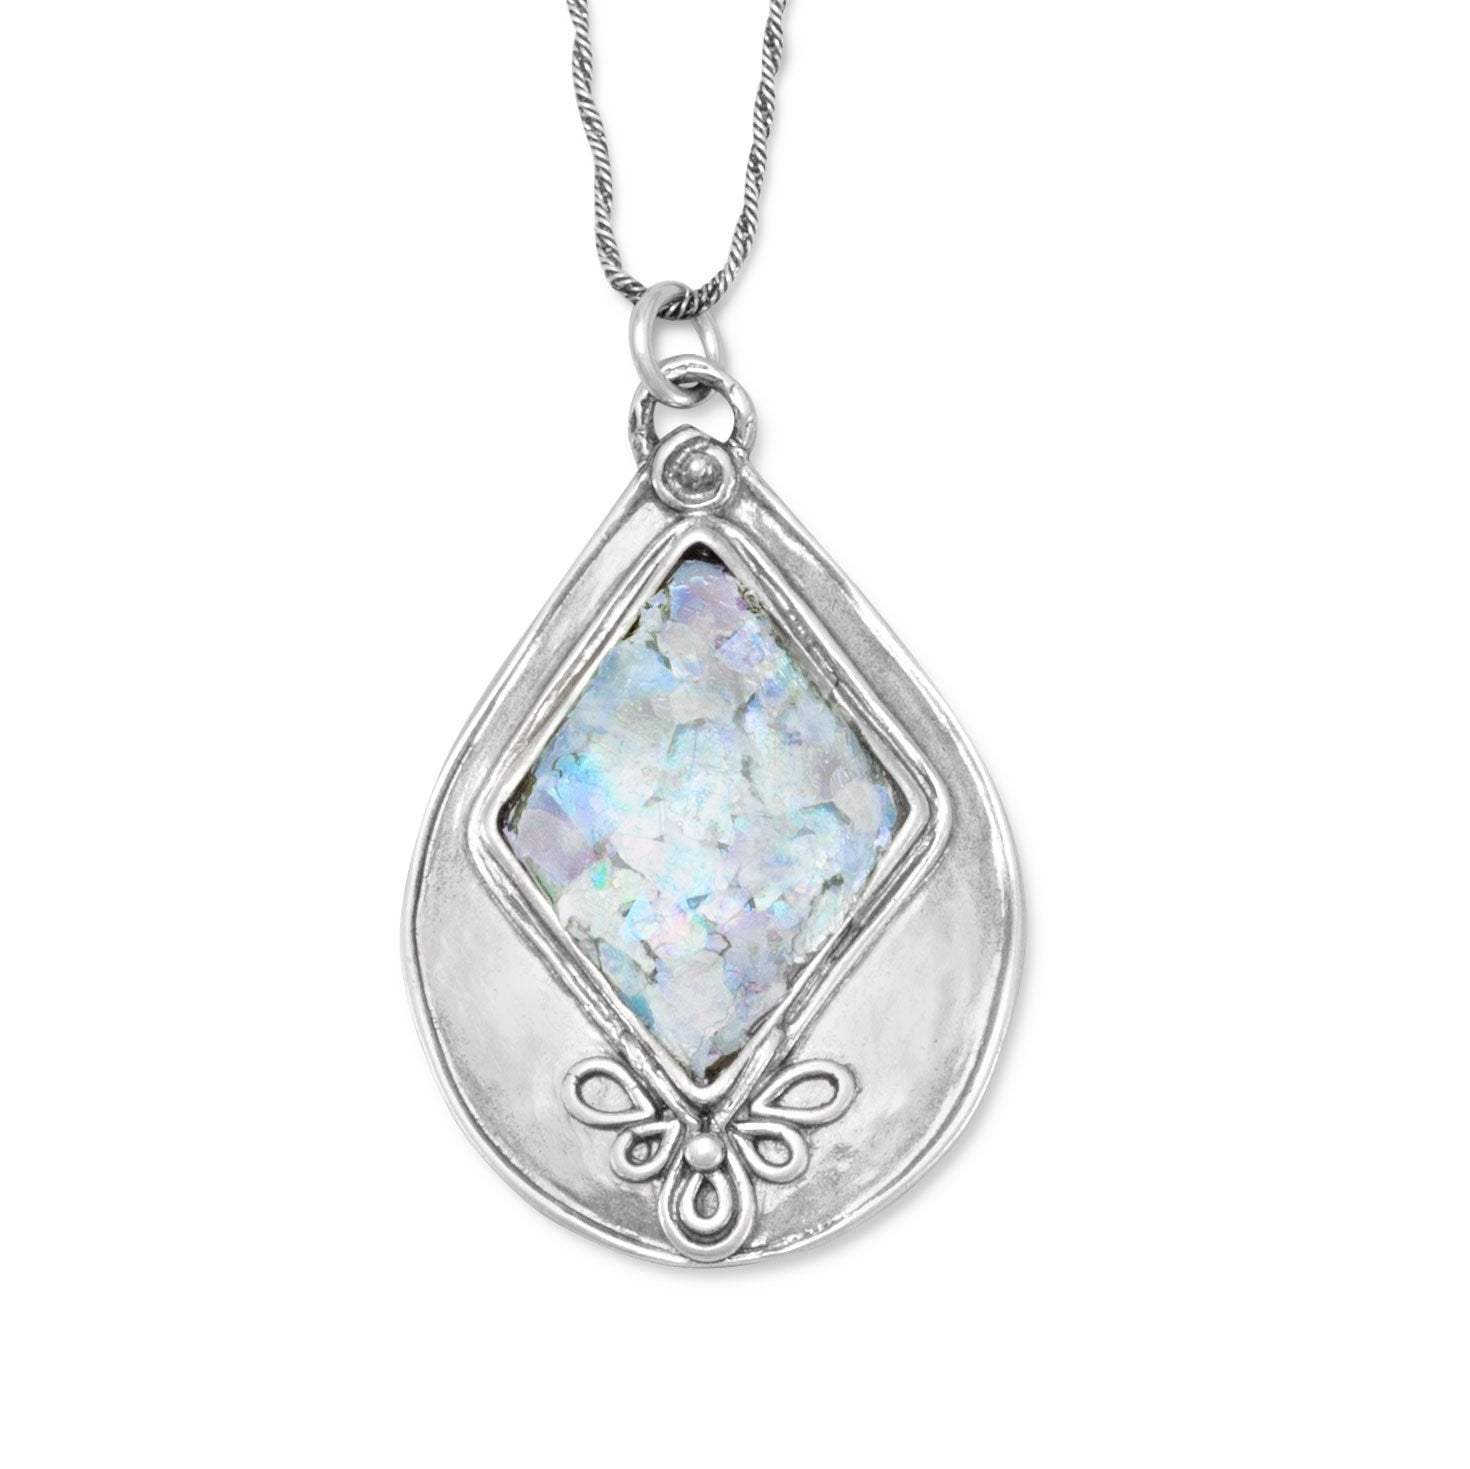 Textured Pear Ancient Roman Glass Necklace - Joyeria Lady